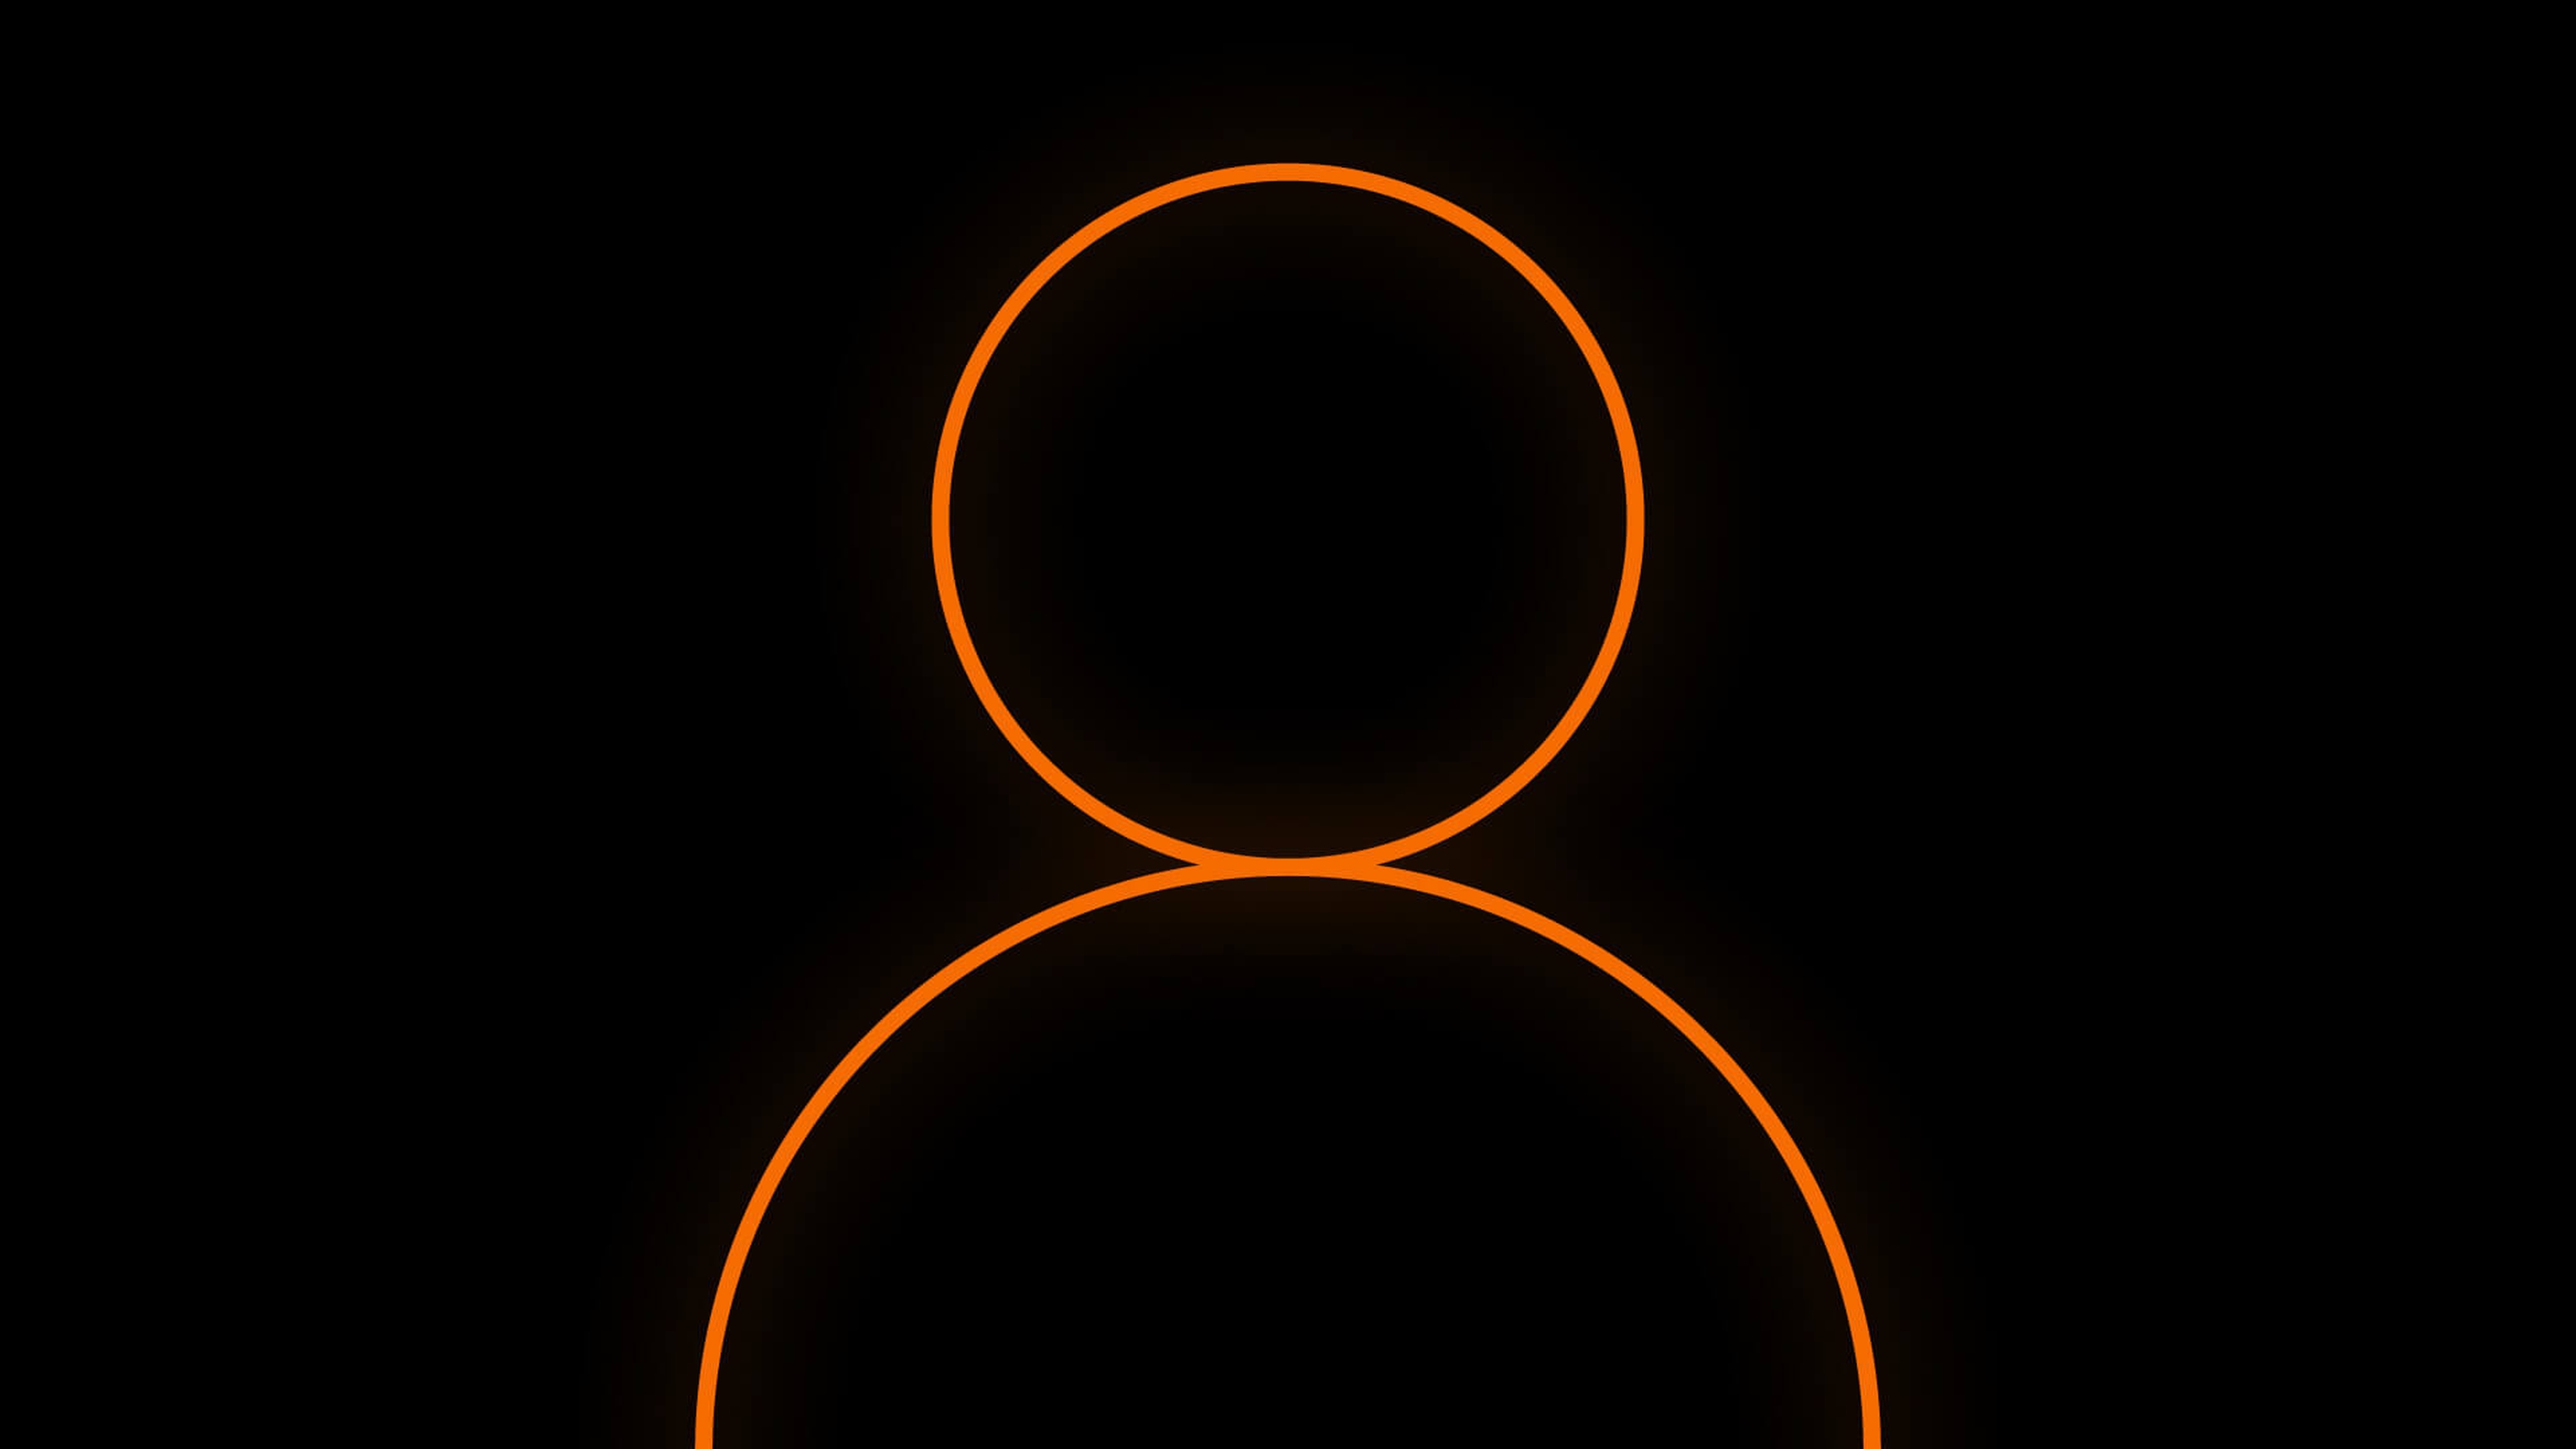 Orange person silhouette on a black background